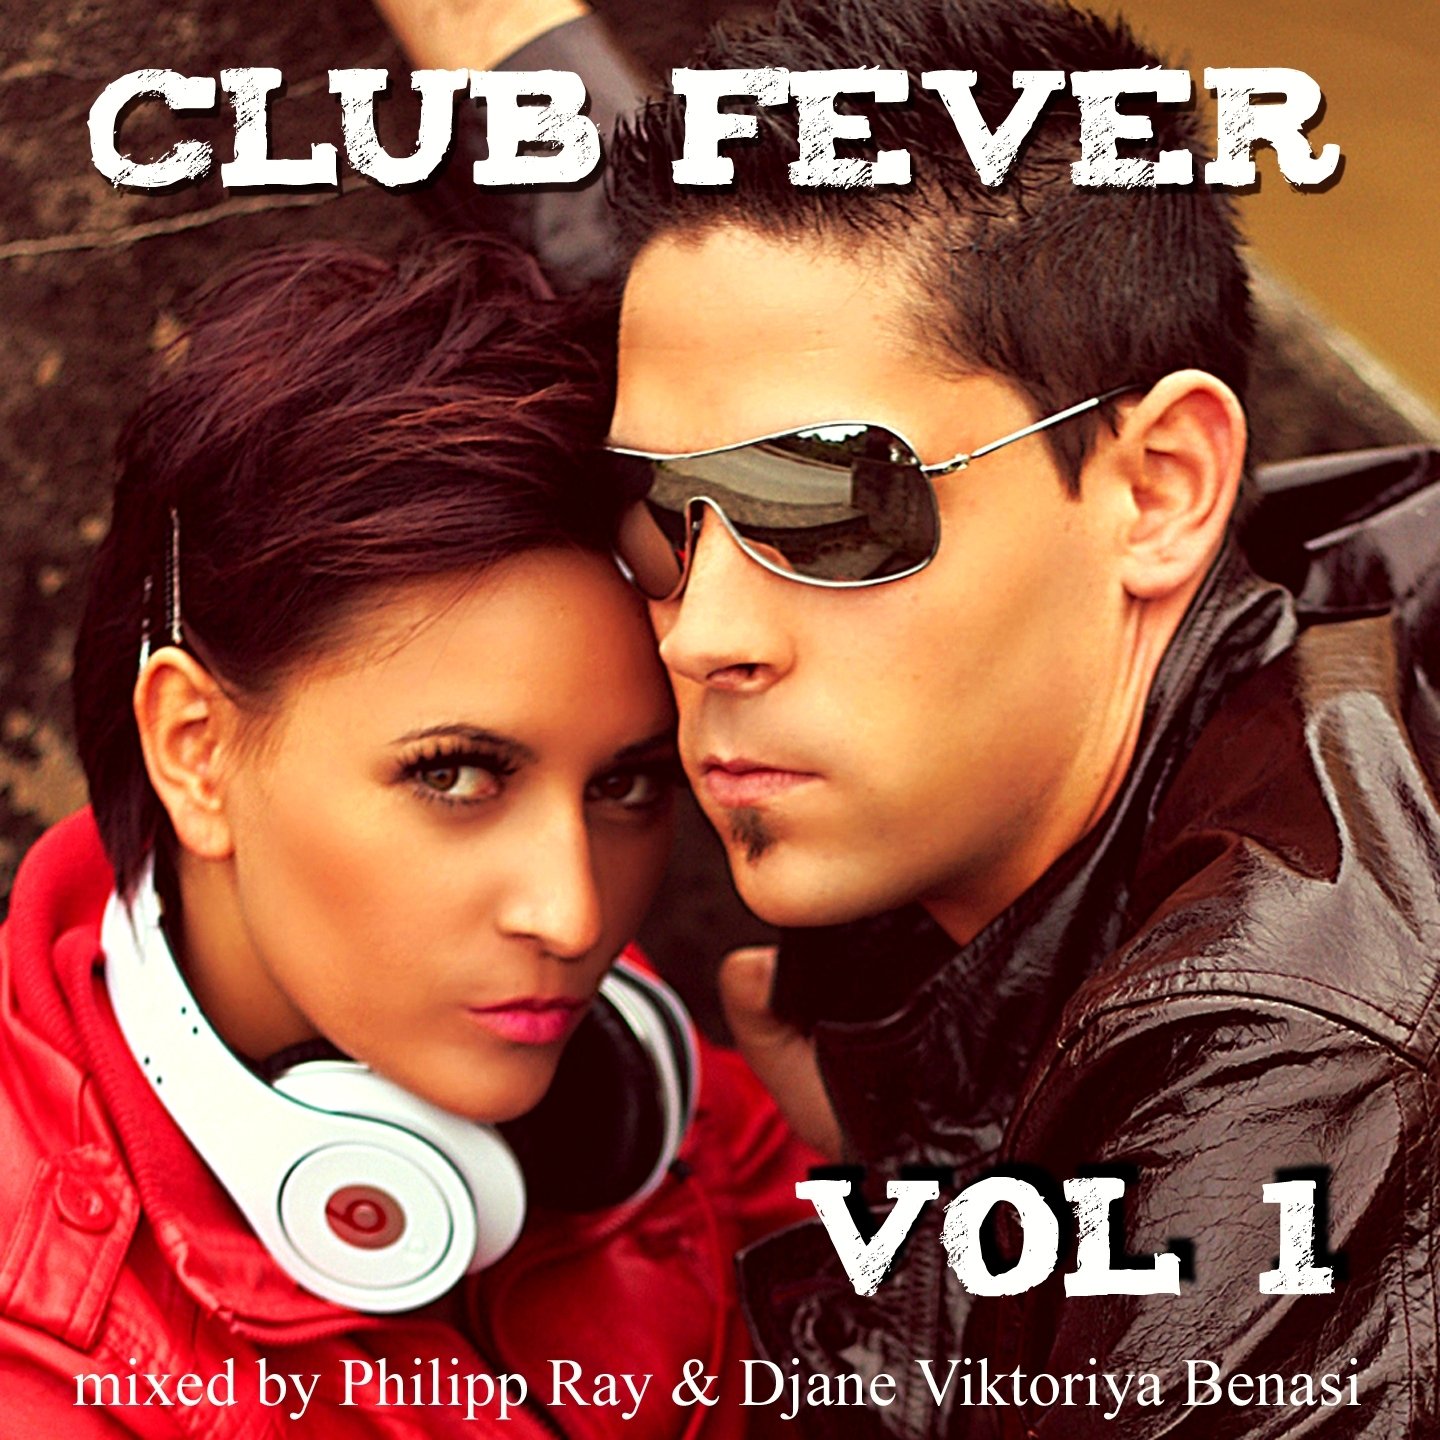 Nightclub Fever. Melody Club Fever Fever кто на обложке. Песня radio version